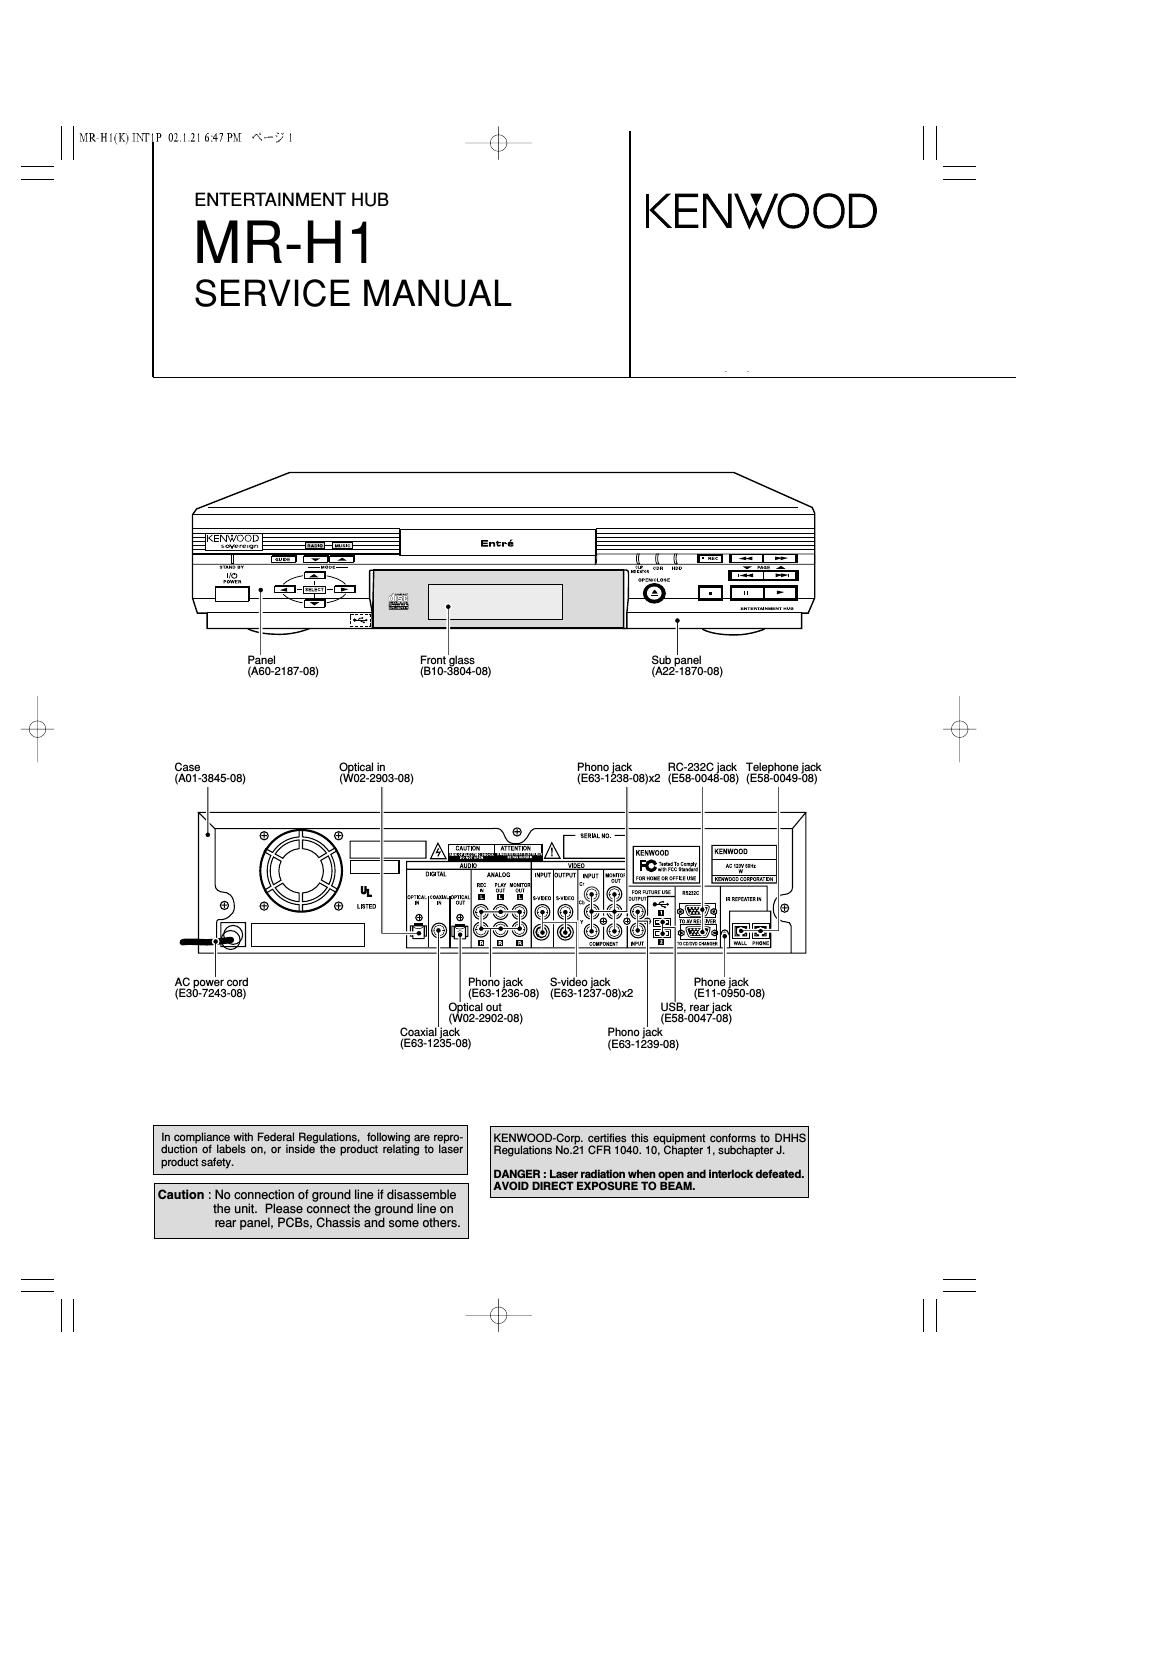 Kenwood MRH 1 Service Manual